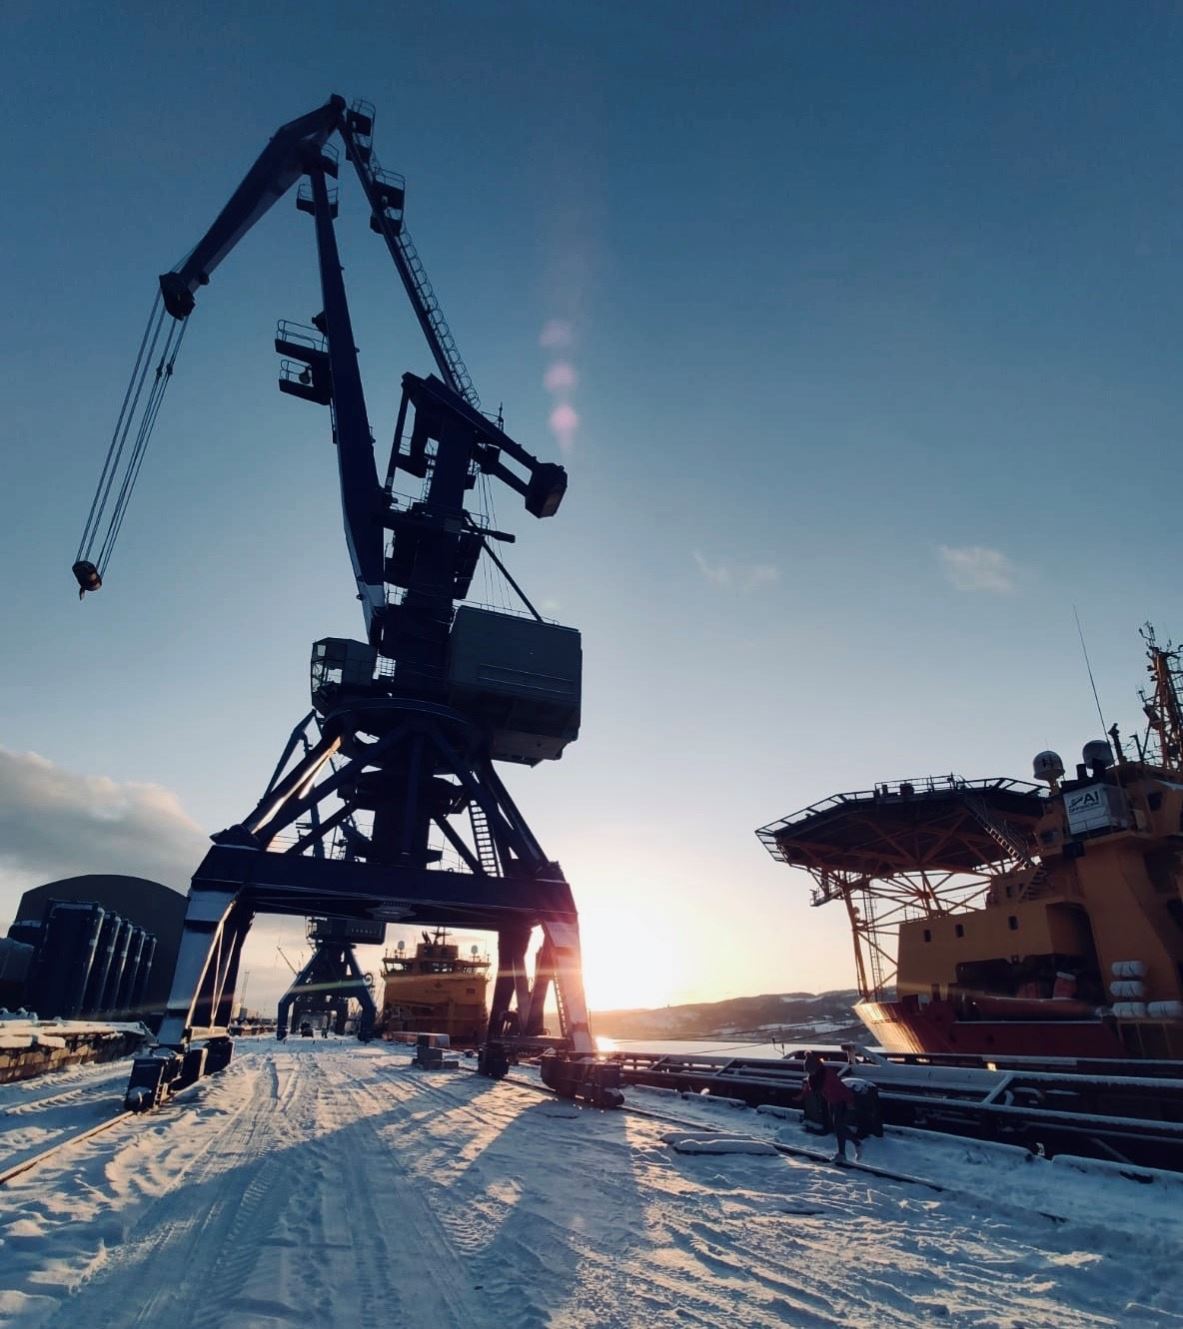 Crane giant - Murmansk, Russia.jpg